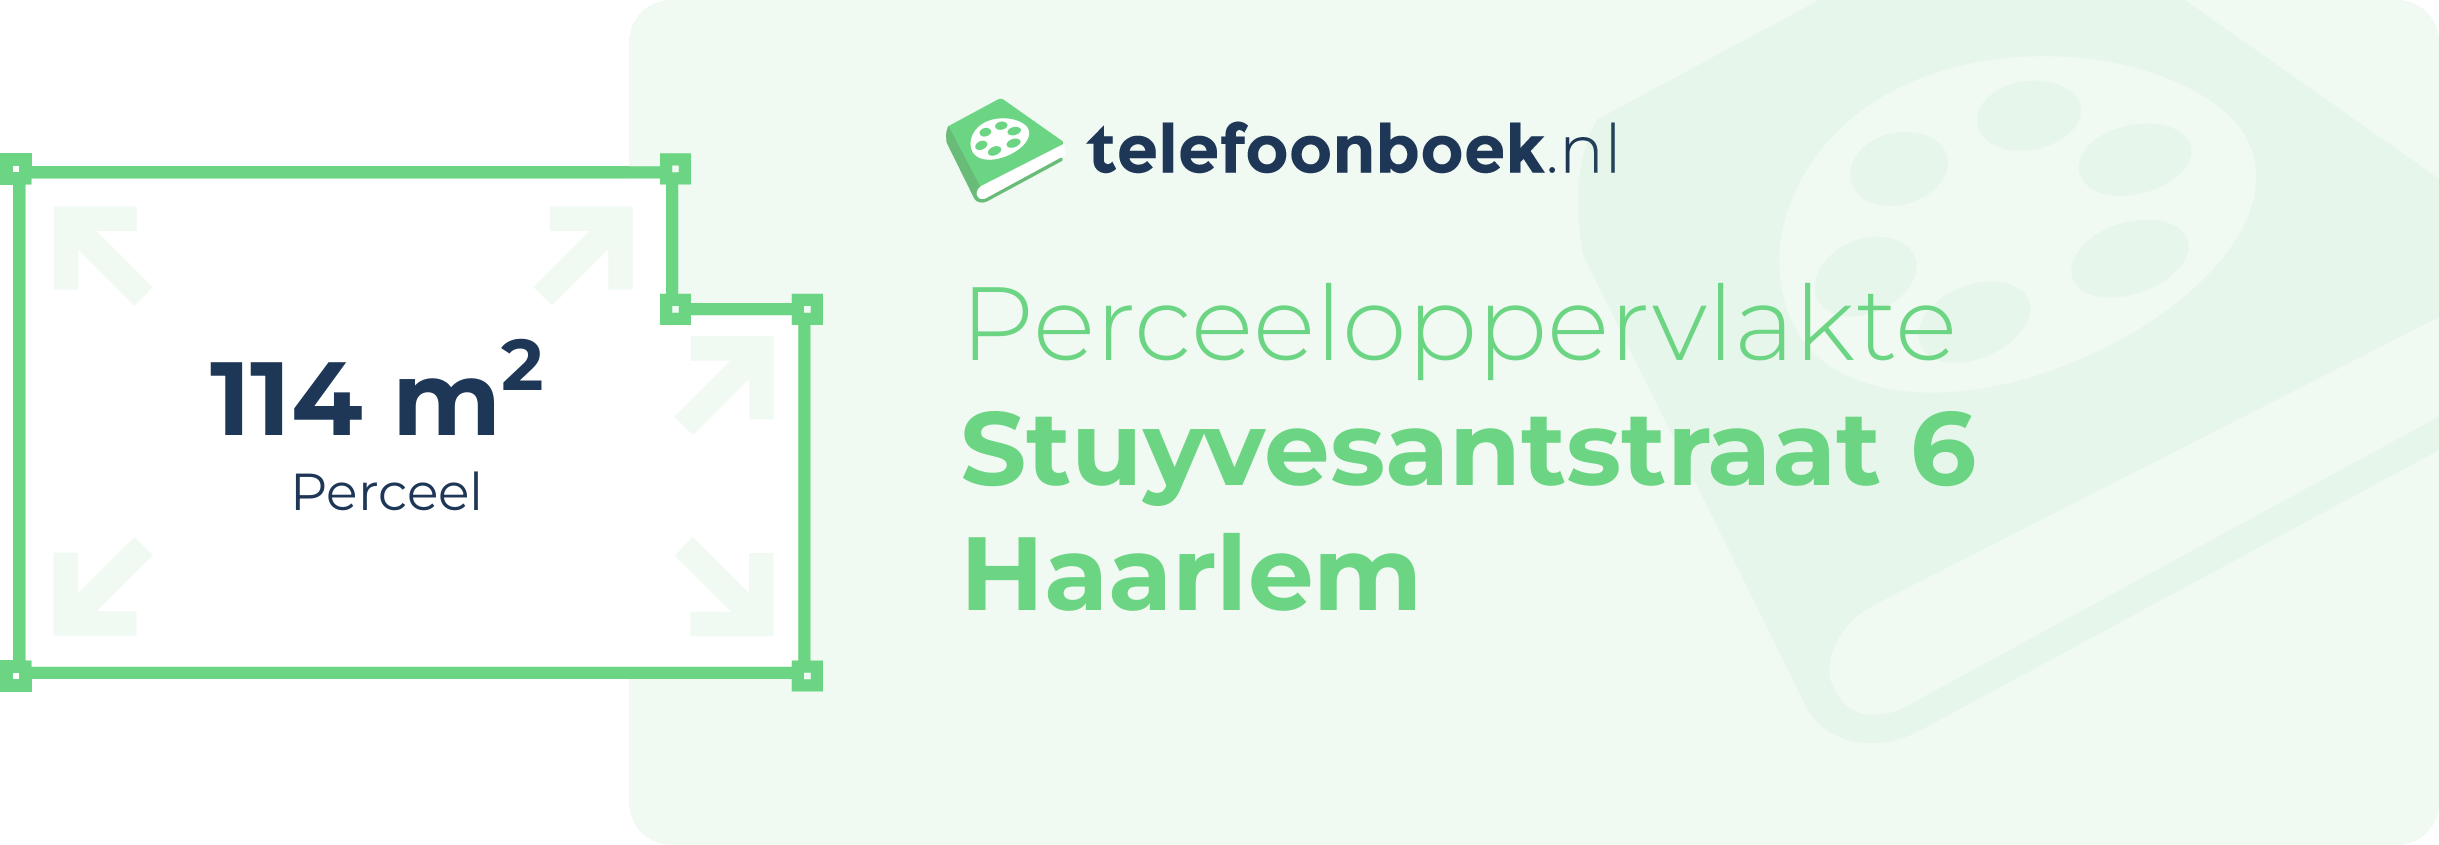 Perceeloppervlakte Stuyvesantstraat 6 Haarlem